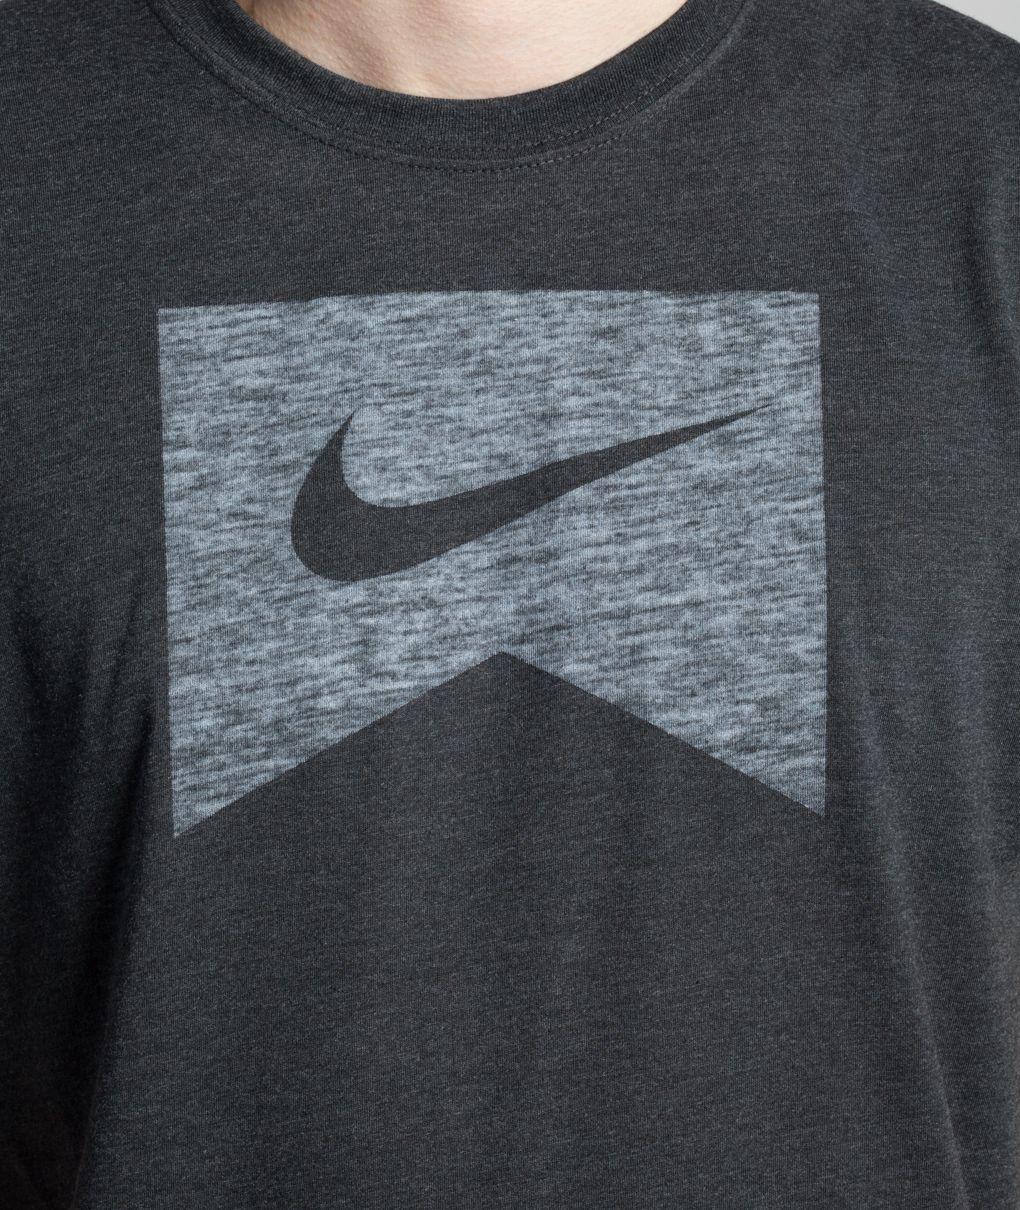 Nike Ribbon Logo - Skateboarding, Shoes & Clothing Online Store - T-shirts S/S - Nike ...